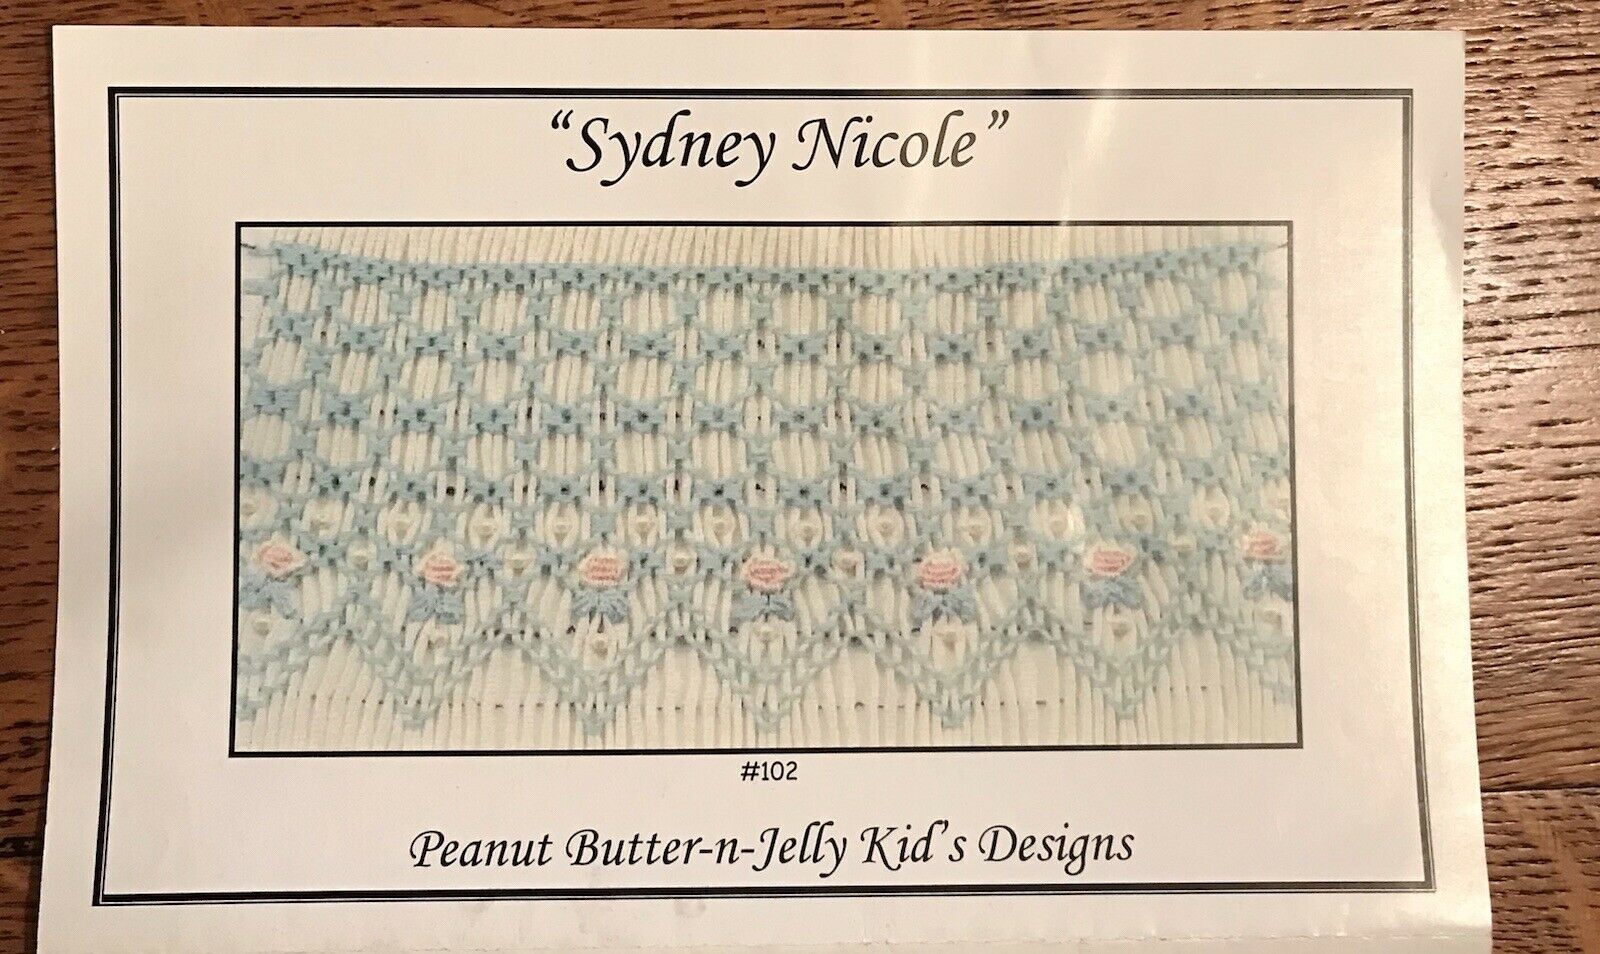 Peanut Butter-n-jelly Kid’s Designs “sydney Nicole” #102 Smocking Instructions